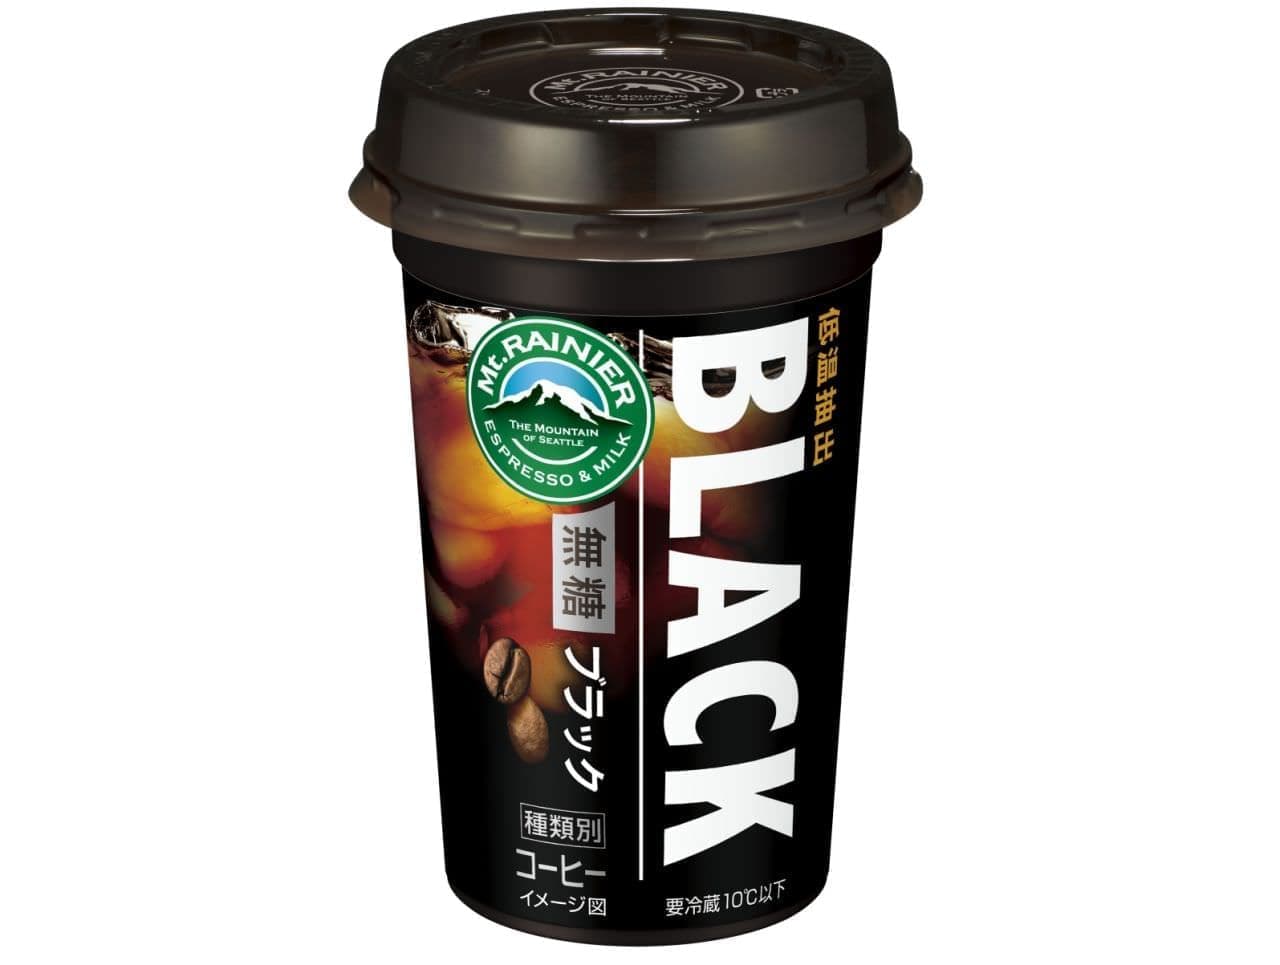 Chilled cup beverage "Mount Rainier Black"